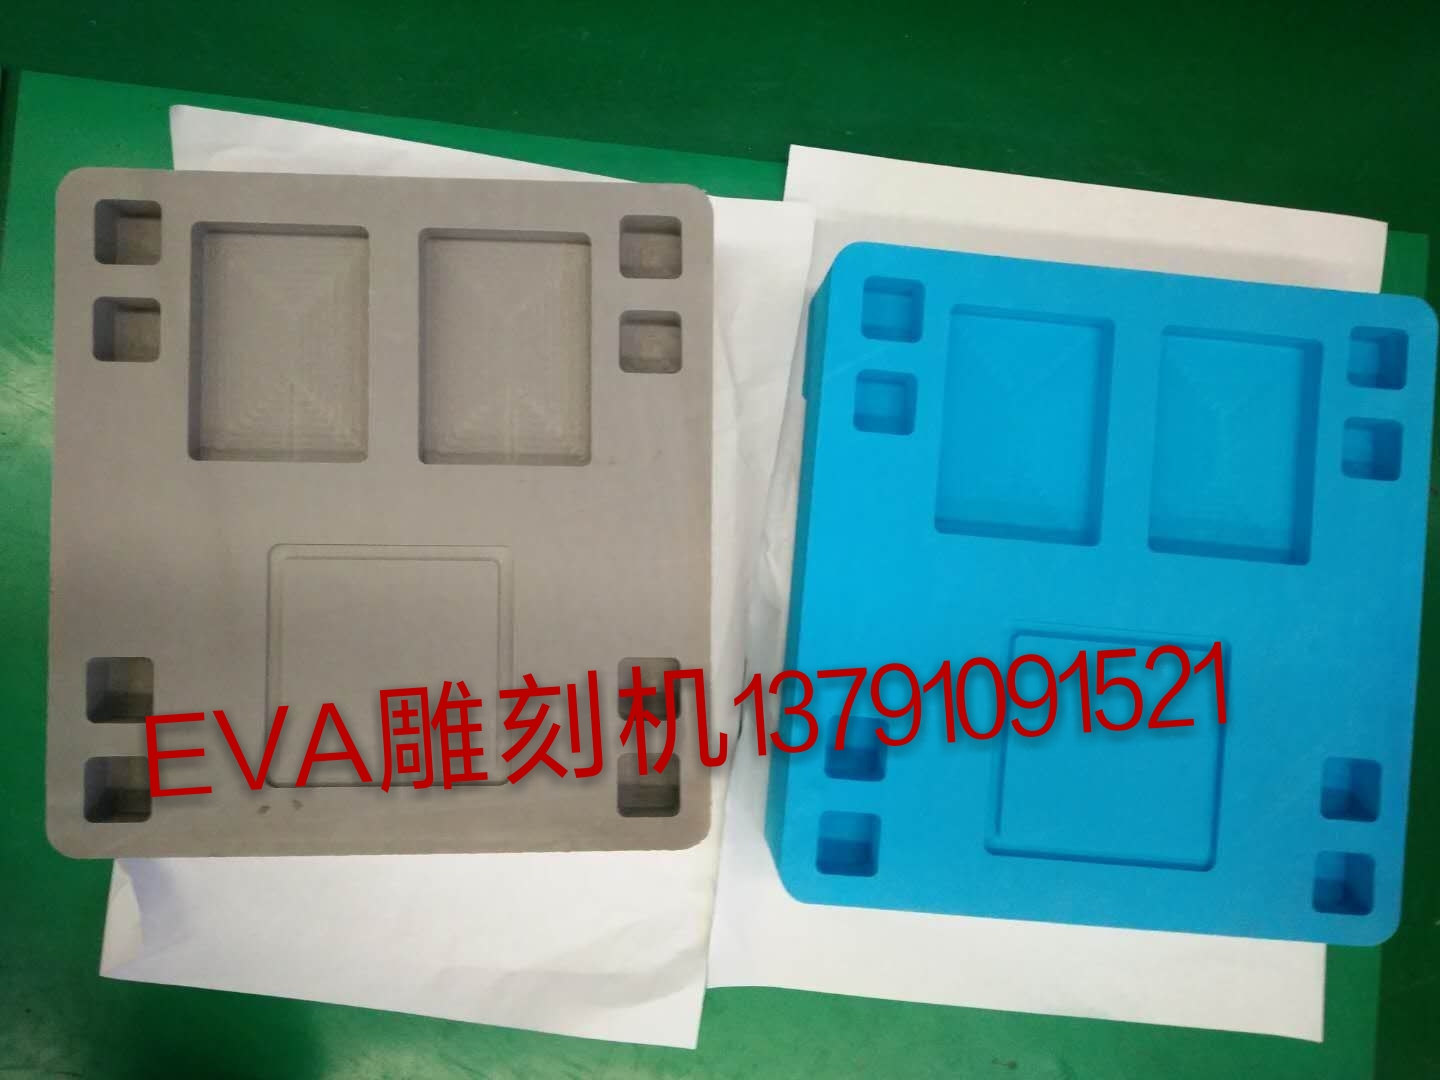 EVA雕刻机 泡沫雕刻机 厂家直销 售后无忧 EVA包装材料雕刻机